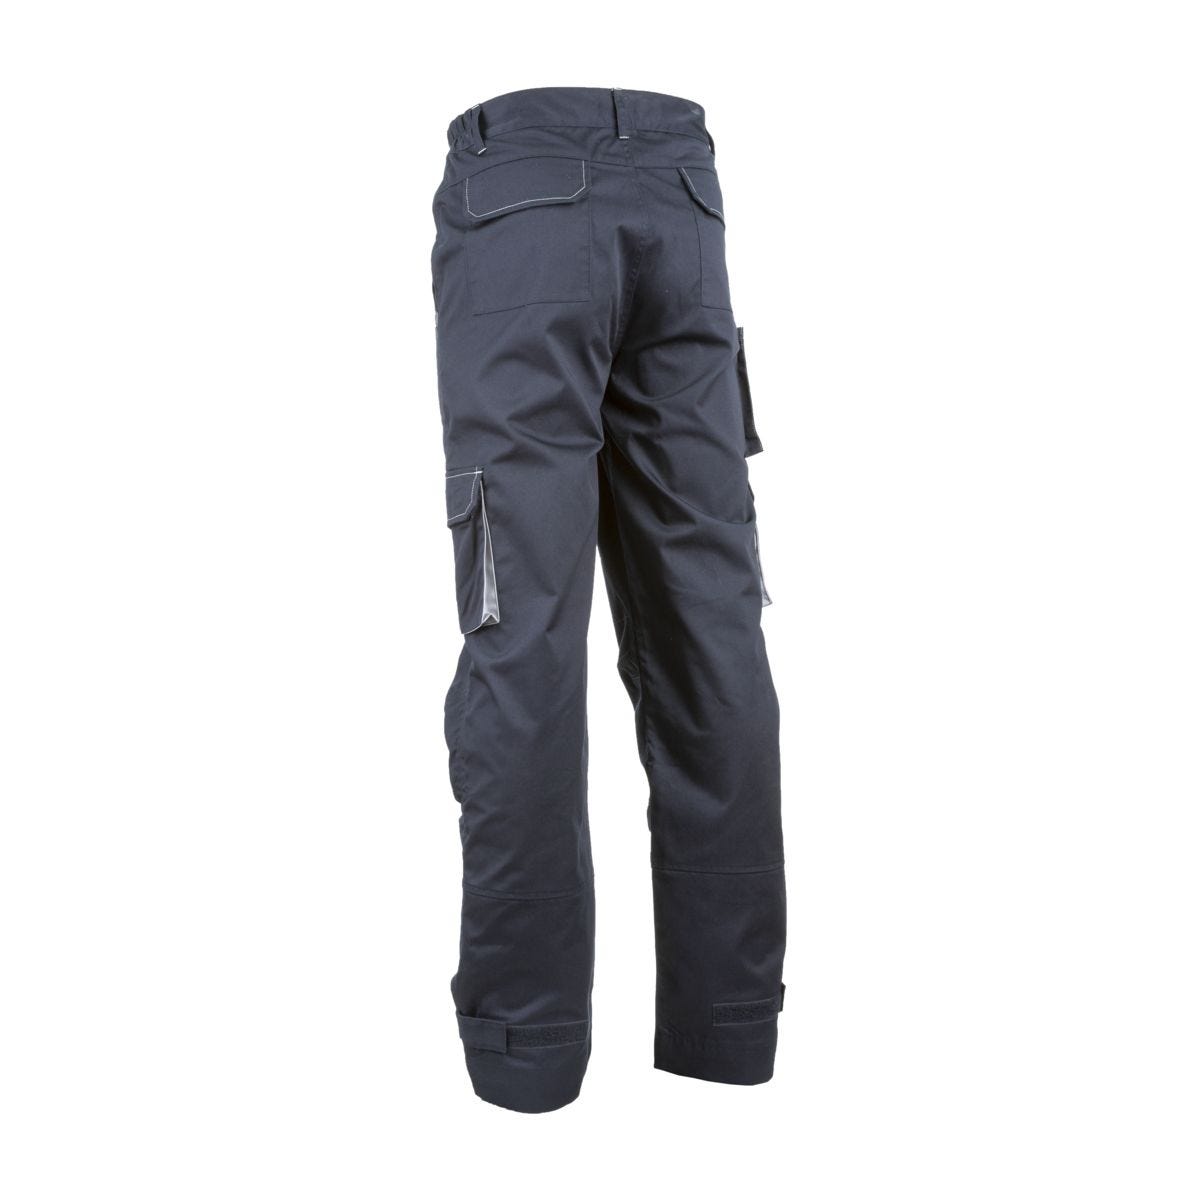 Pantalon NAVY II marine/gris - COVERGUARD - Taille 4XL 1